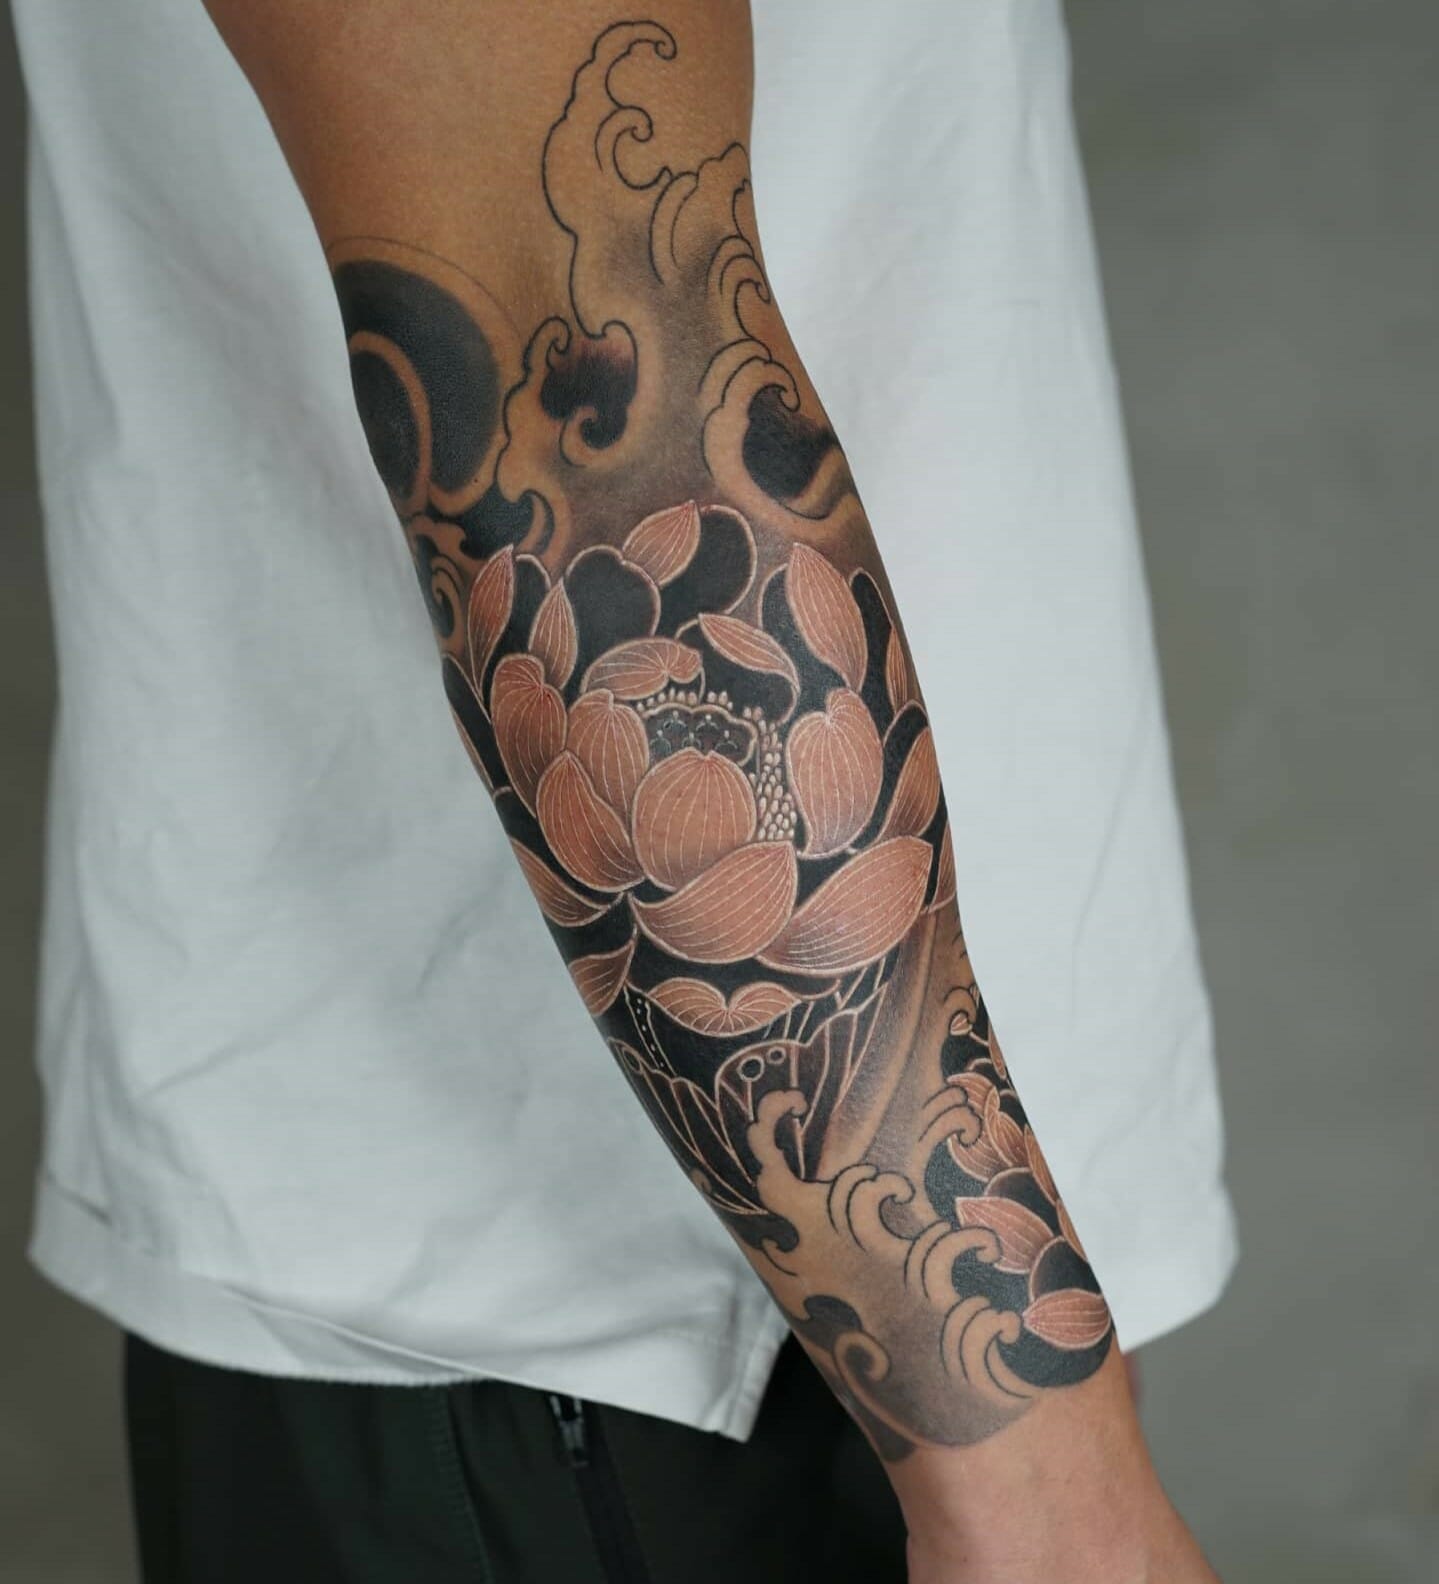 11+ Japanese Full Sleeve Tattoo Ideas To Inspire You! - alexie